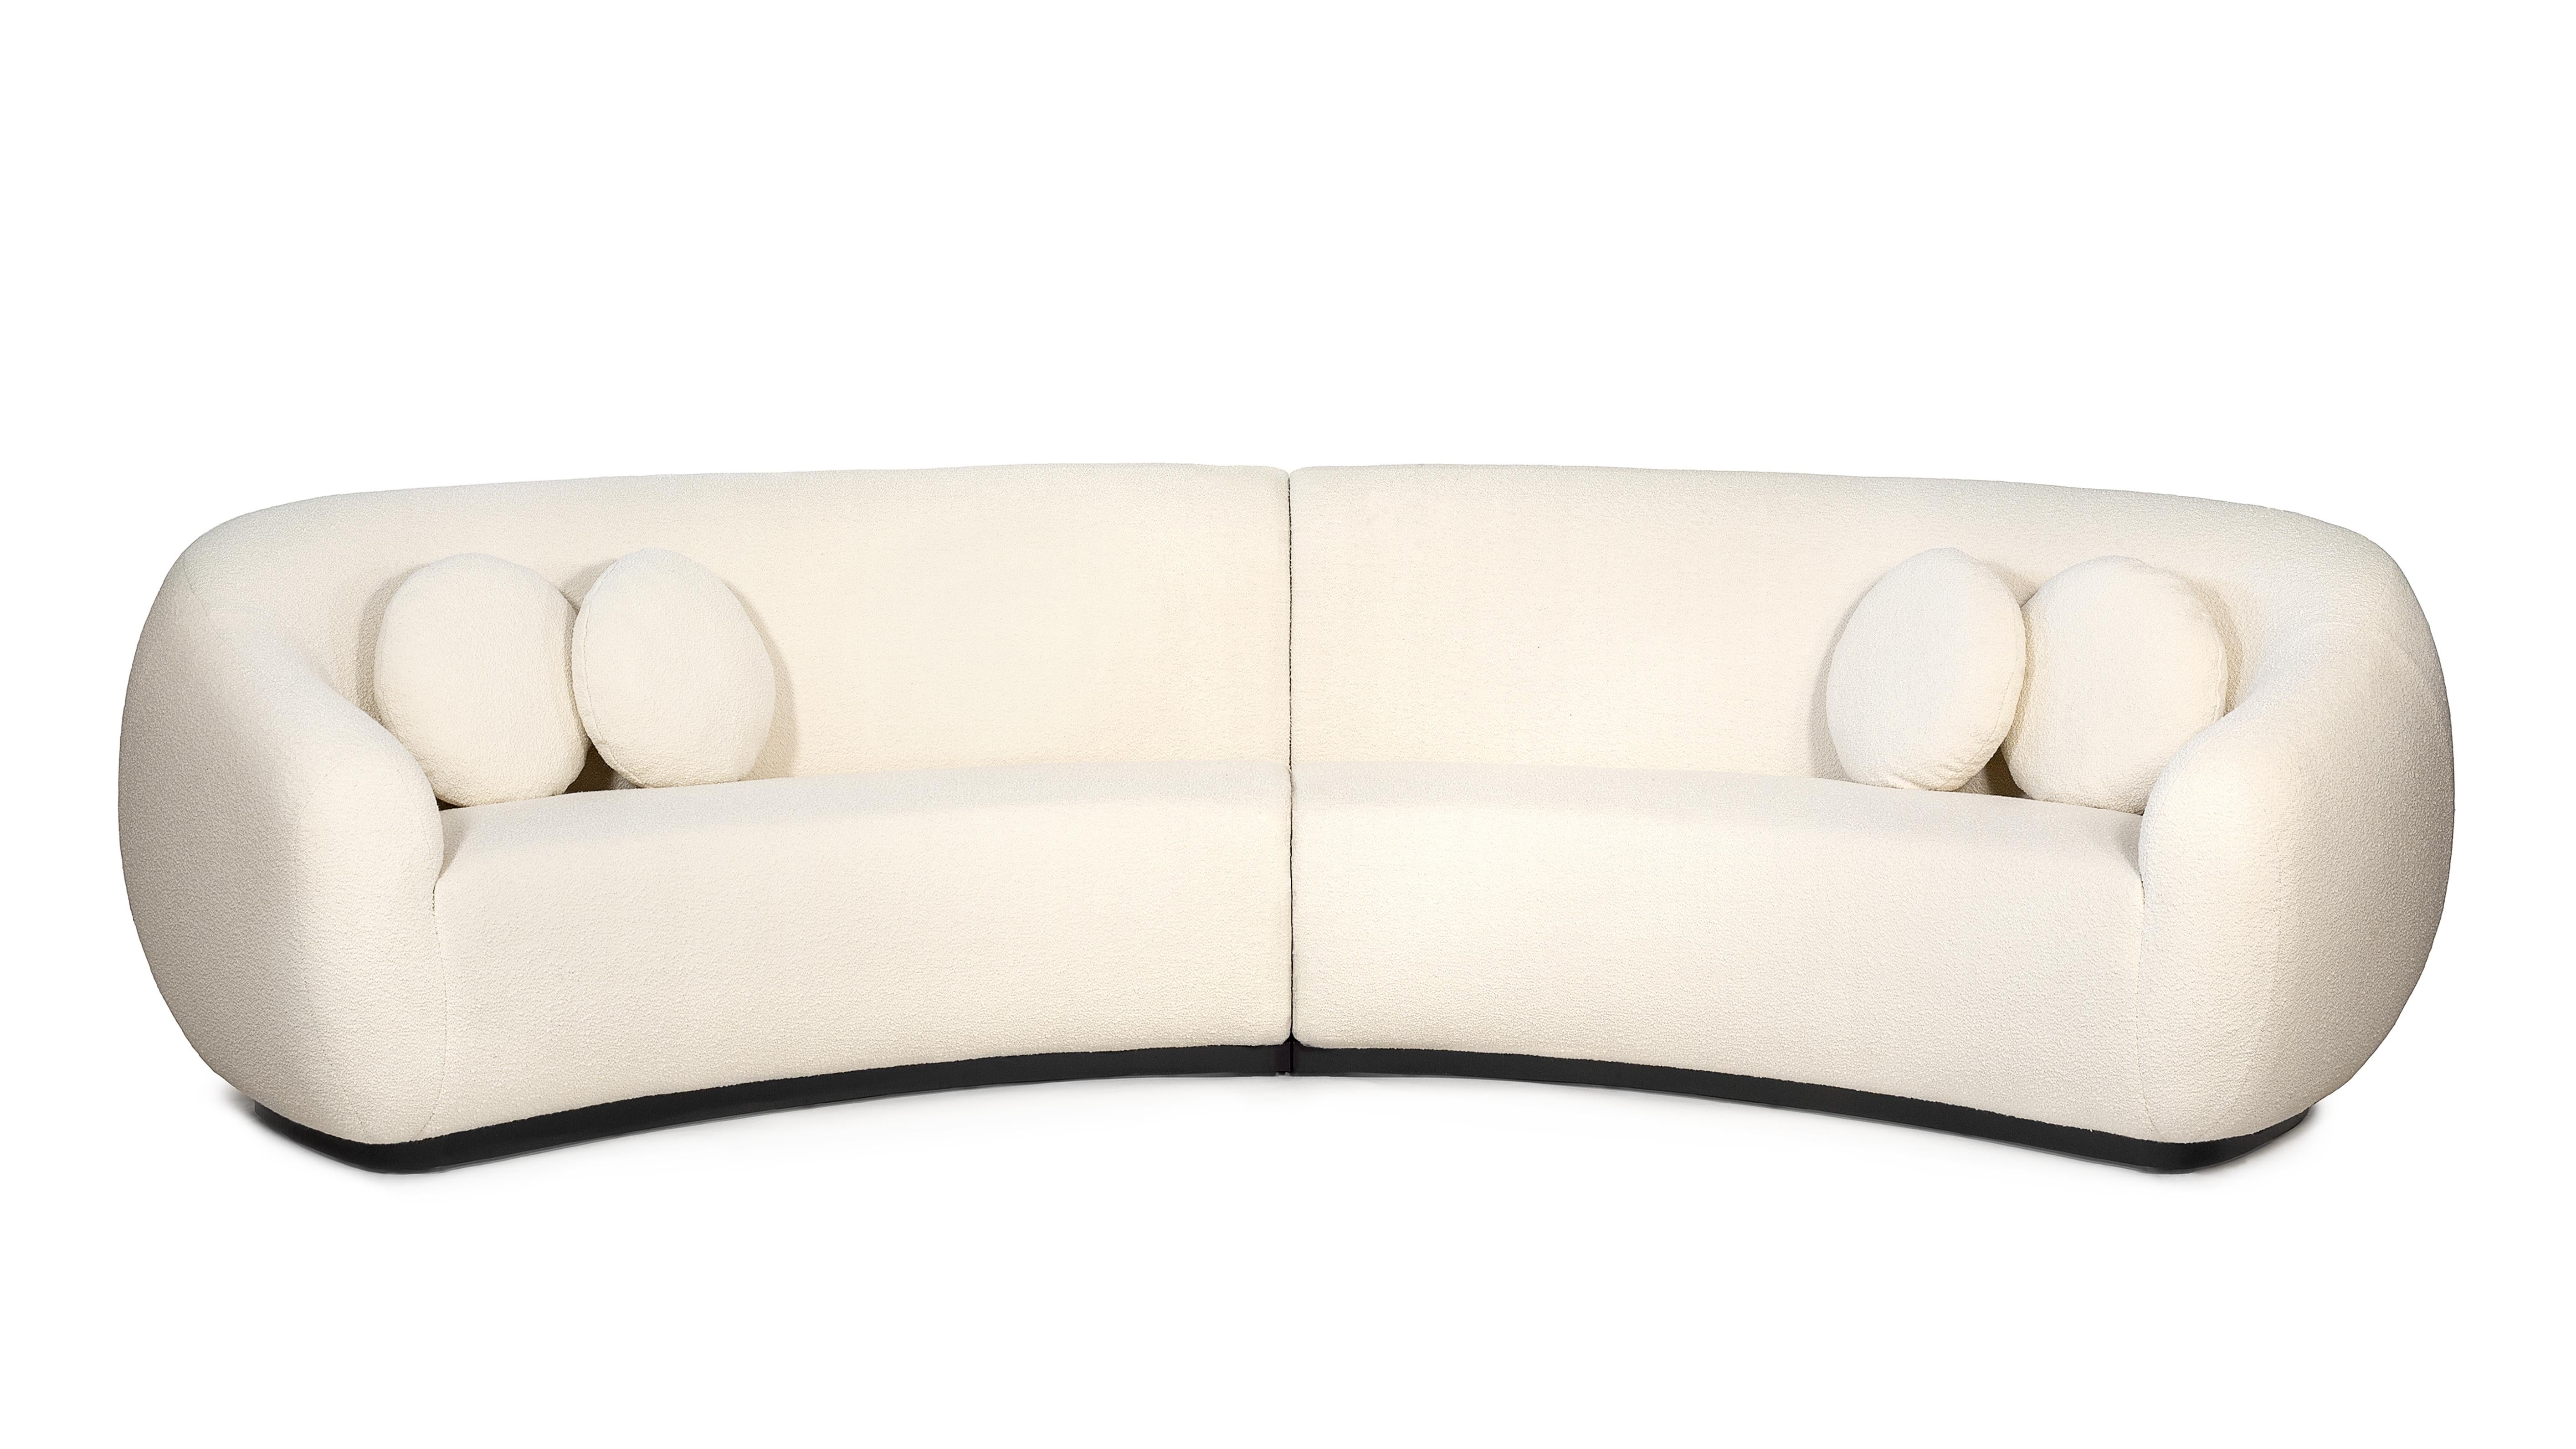 Niemeyer II Round Sofa by InsidherLand
Dimensions: D 165 x W 350 x H 86 cm.
Materials: Dark oak, InsidherLand Lama Ref. 1 fabric.
120 kg.
Available in different fabrics.

The Niemeyer II round sofa is named after the Brazilian Architect Oscar